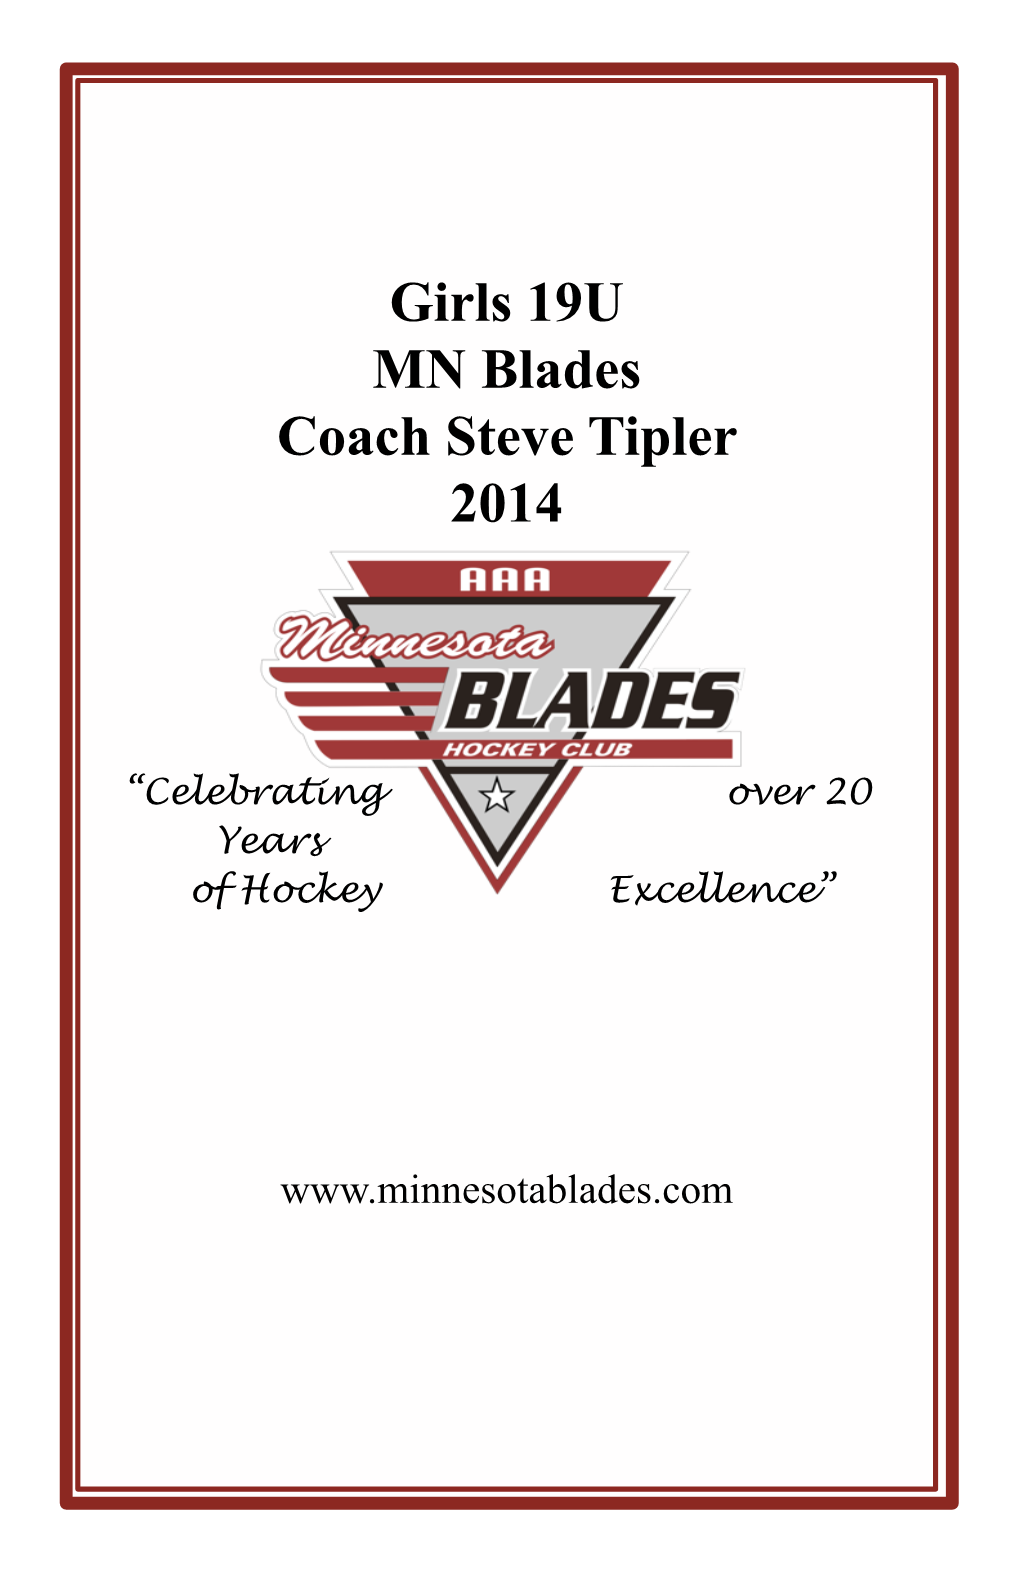 Girls 19U MN Blades Coach Steve Tipler 2014